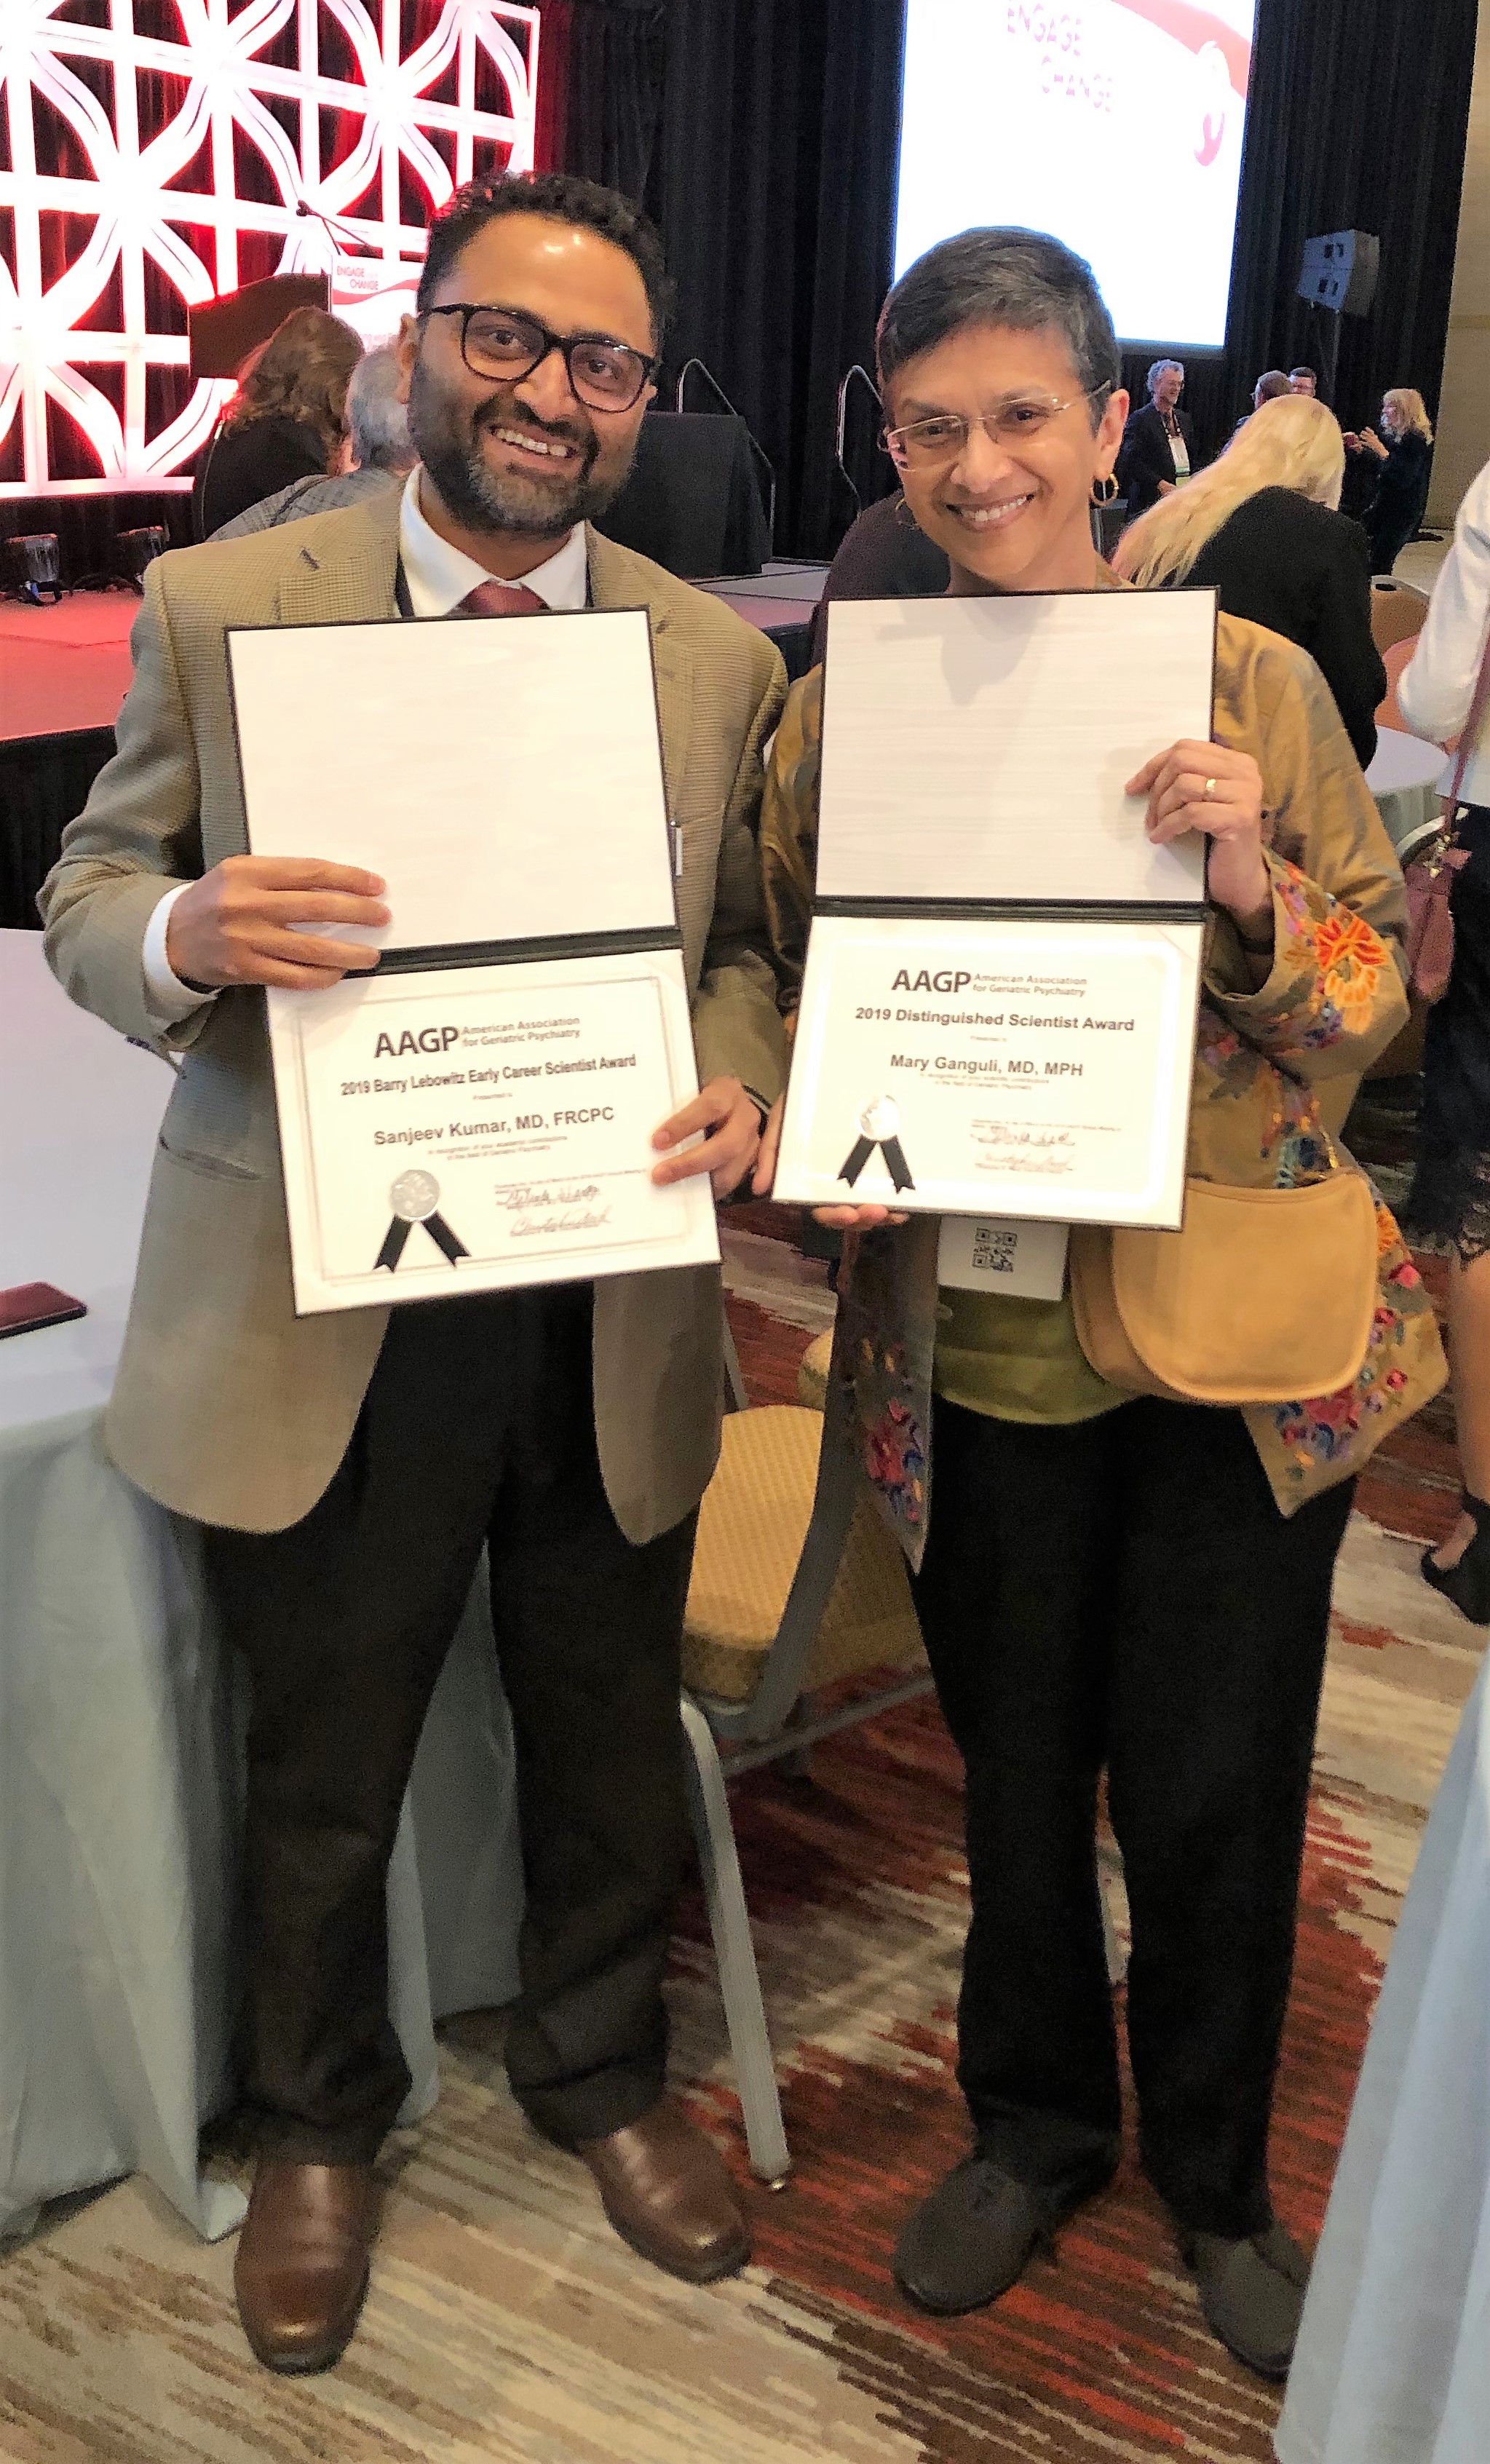 Drs. Sanjay Kumar and Mary Ganguli display their 2019 AAGP Awards